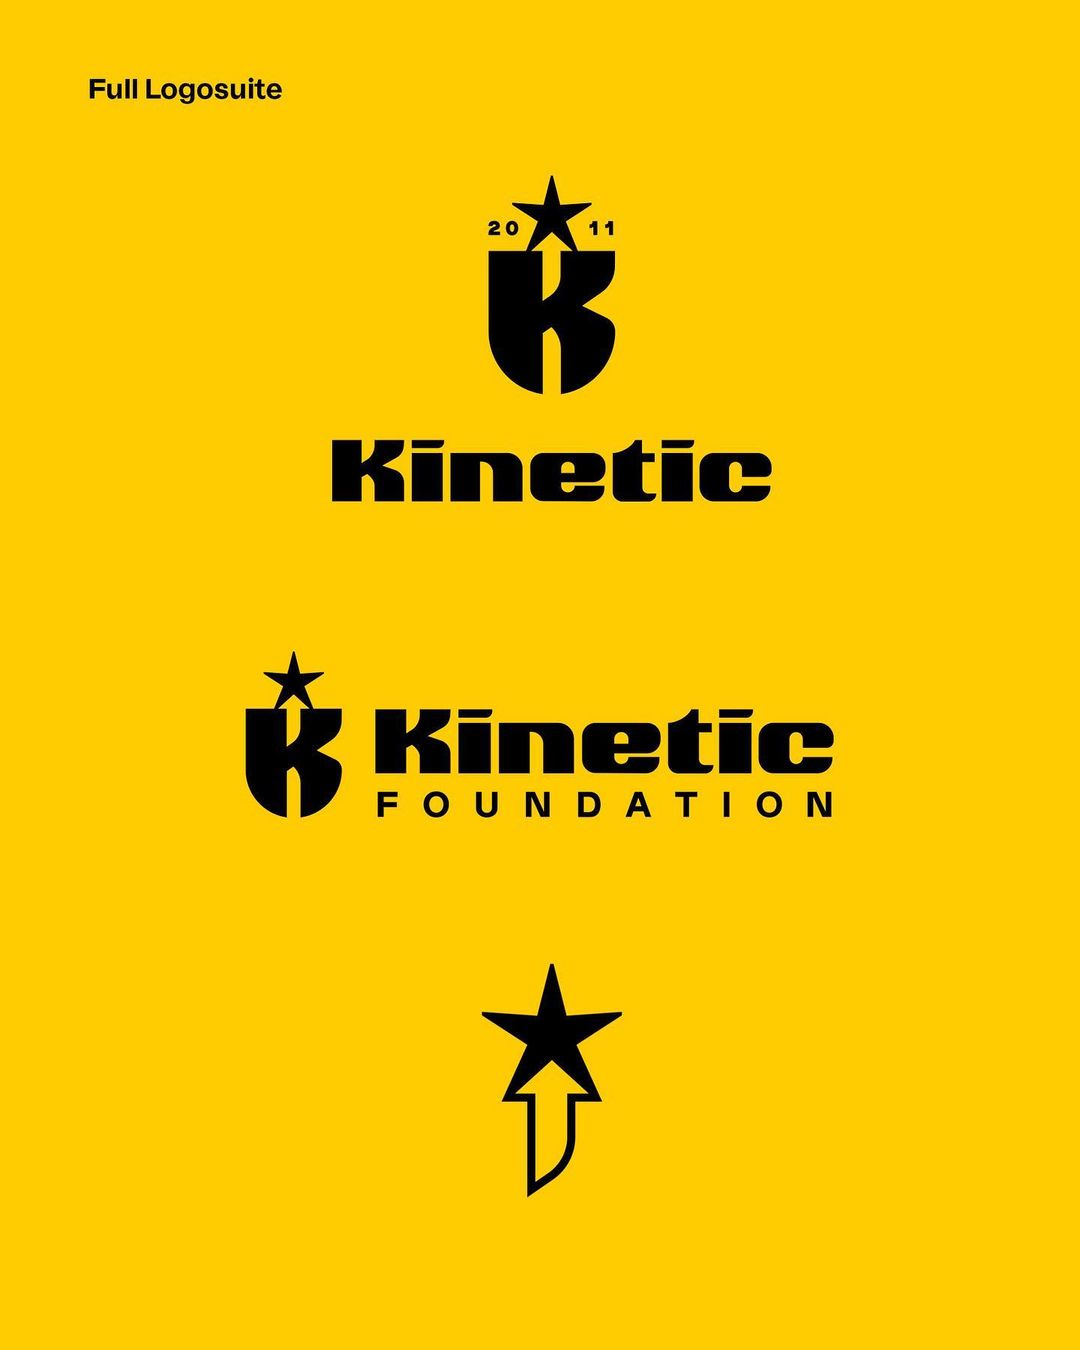 Kinetic Foundation launch new logo